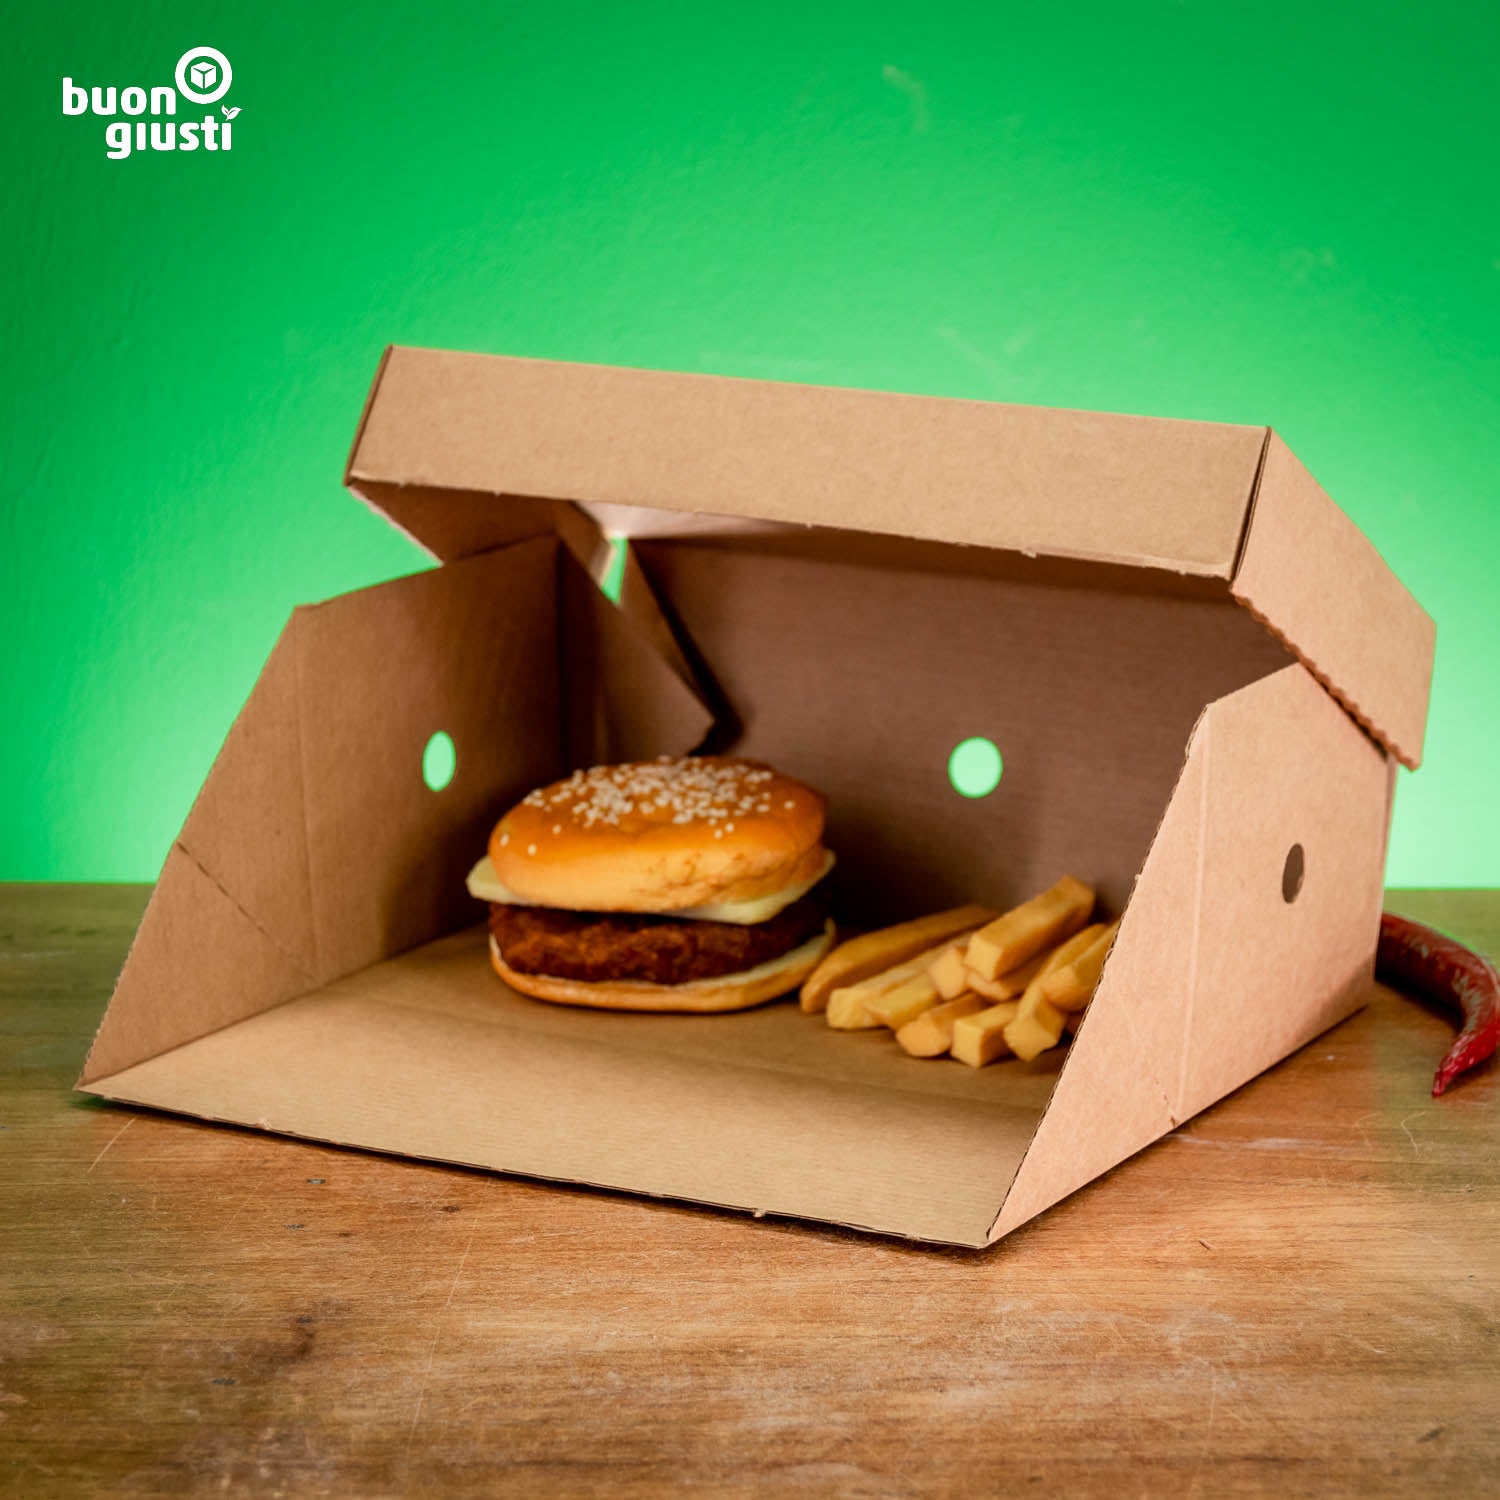 200x Bio Burger-Box Wellpappe 24x12x10 cm für 2 Burger braun - Burger - buongiusti AG - personalisiert ab 100 Stück